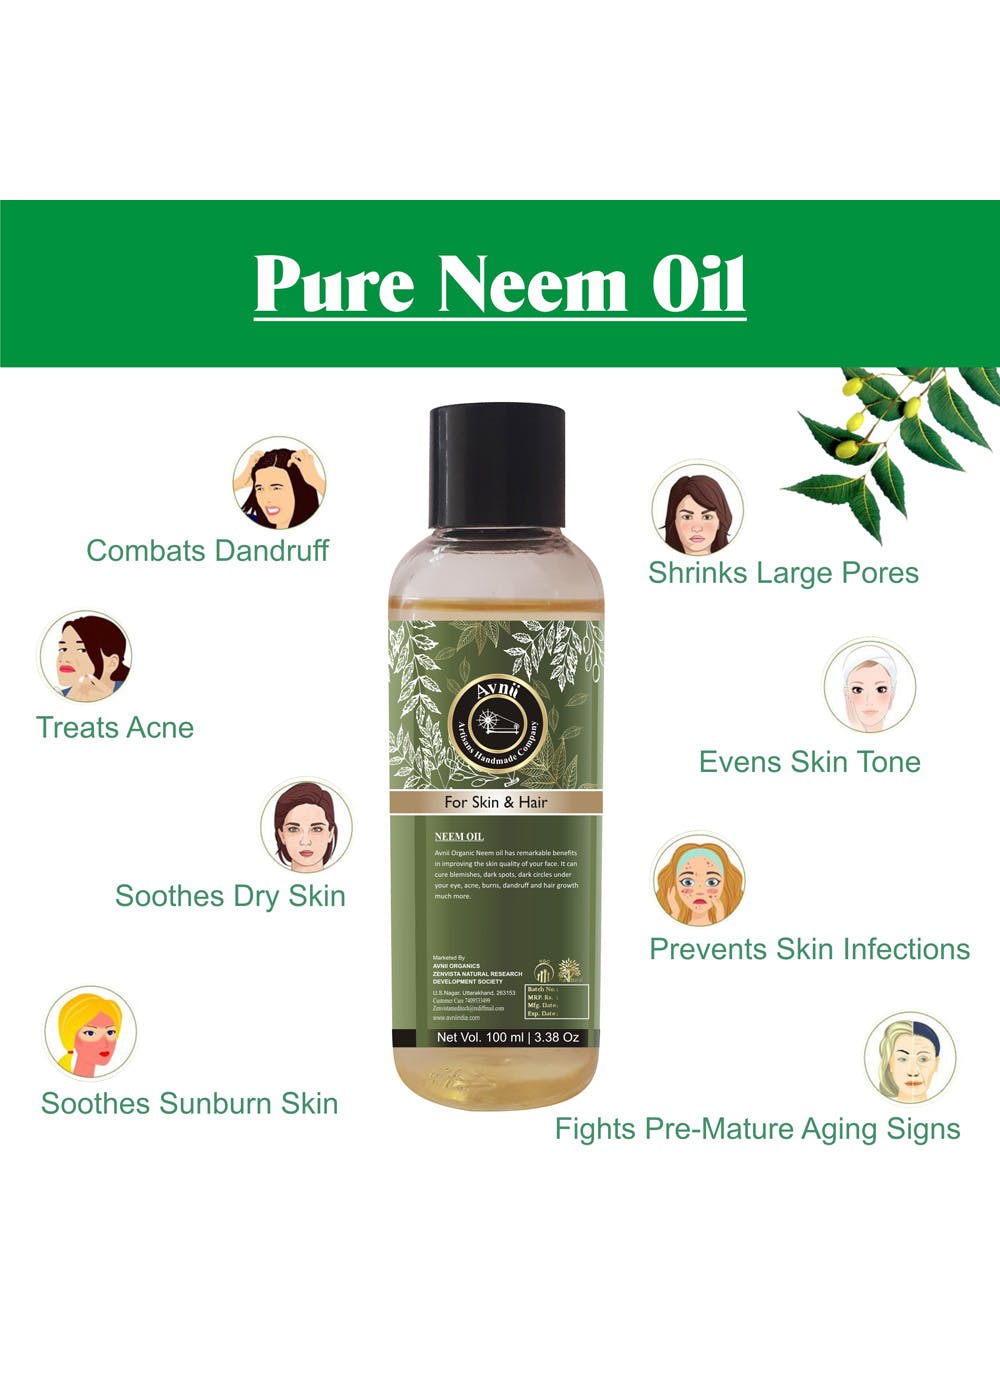 Get Neem Oil For Hair & Skin Care - 100ml at ₹ 269 | LBB Shop